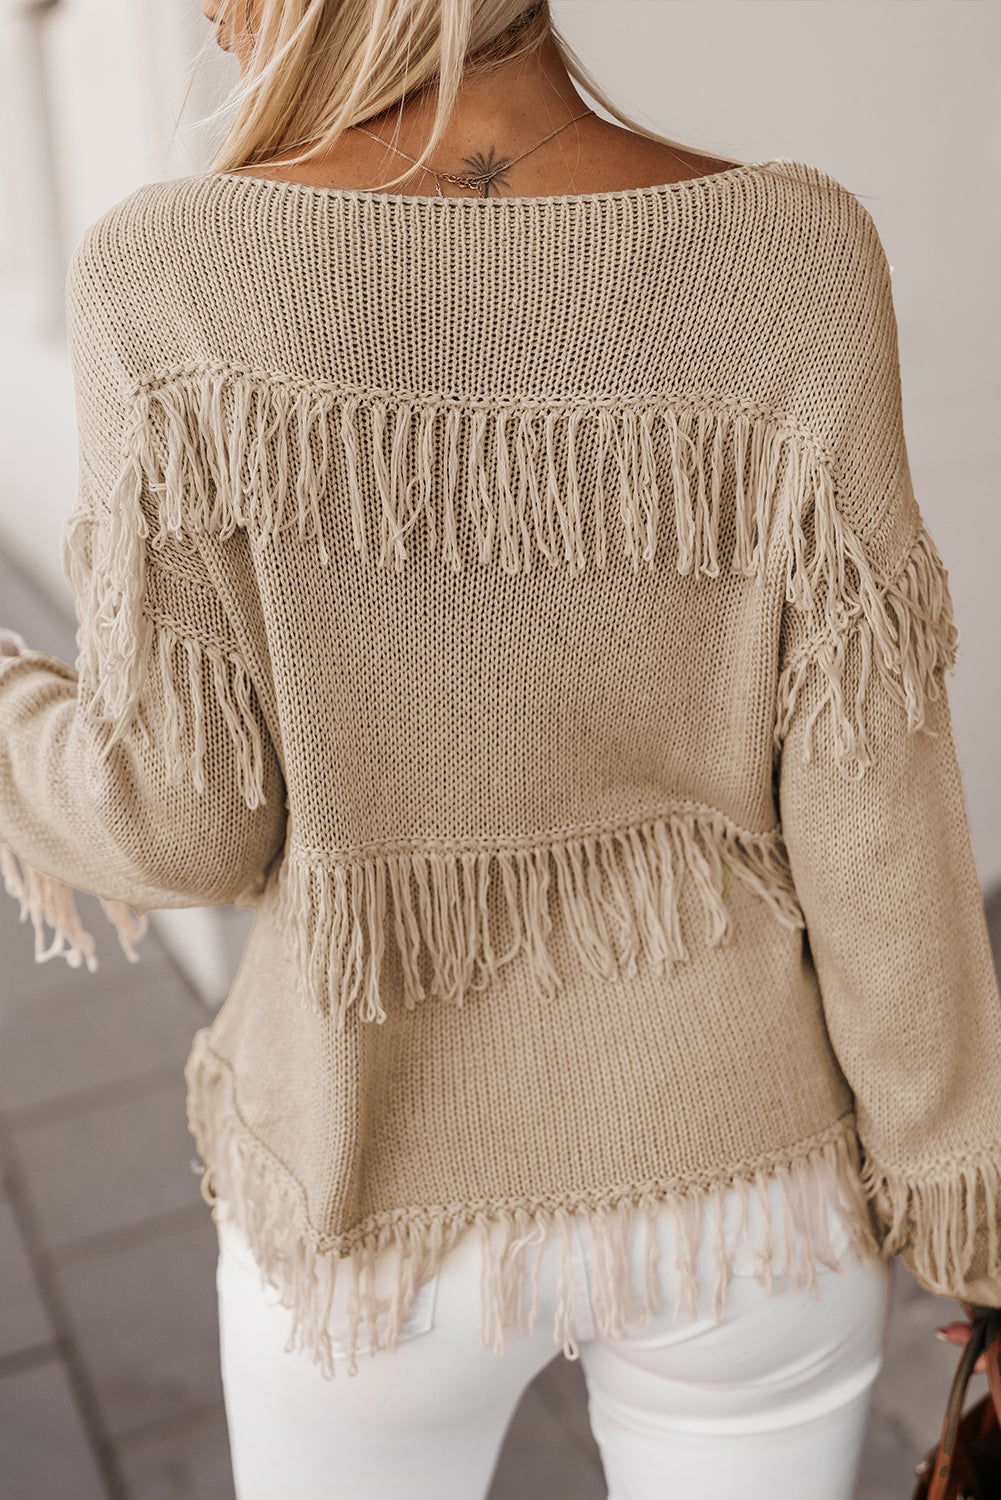 Boho Tasseled Knitted Sweater (Khaki)